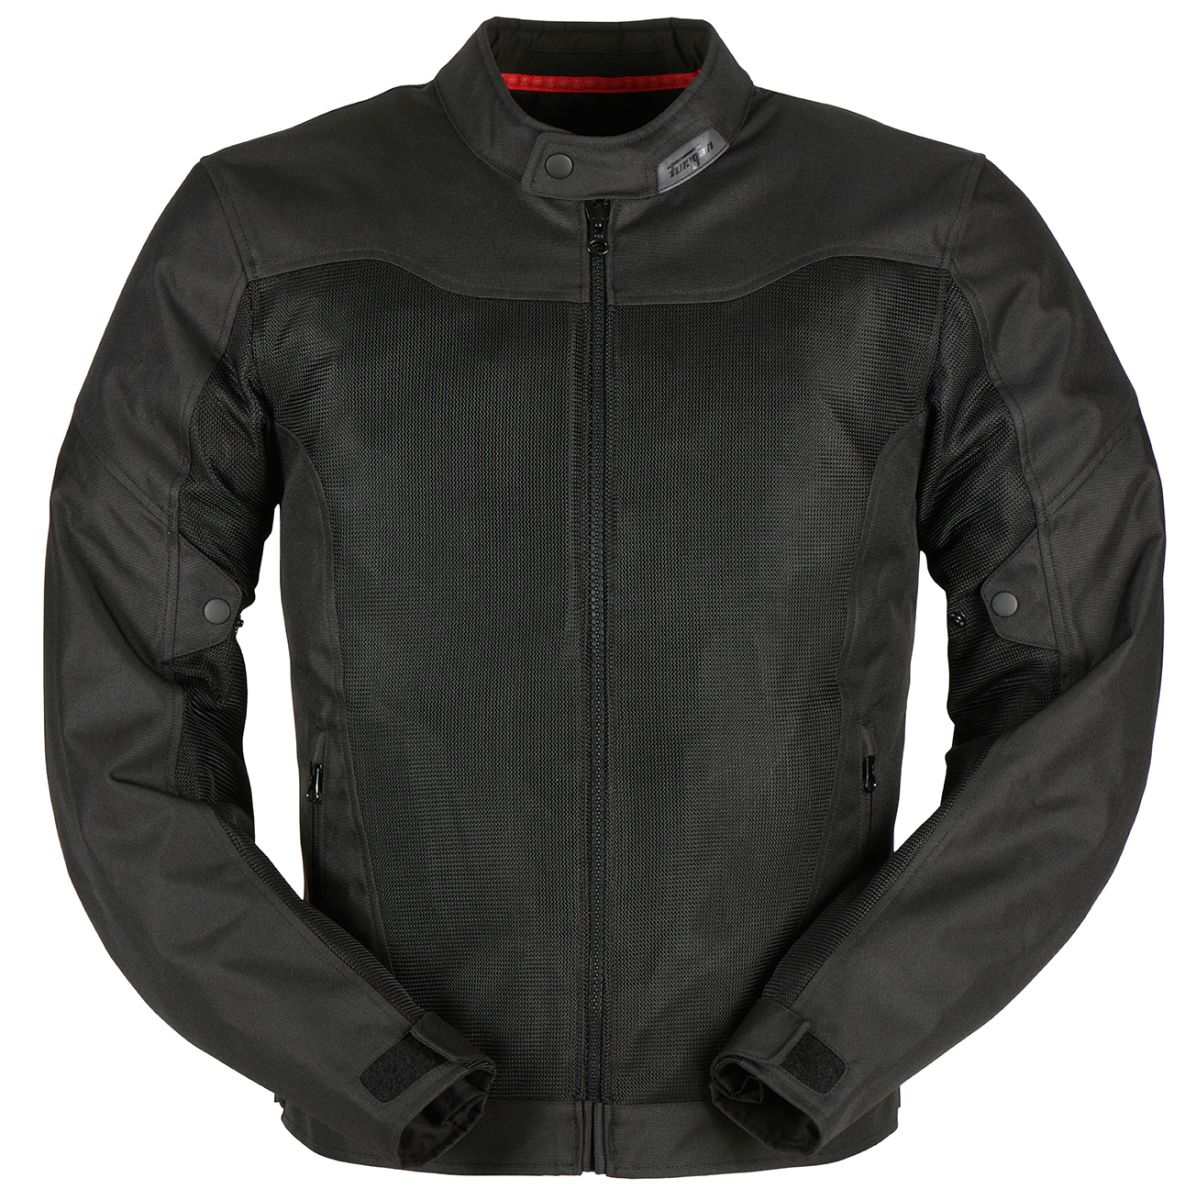 Image of Furygan Mistral 3 Evo Jacket Black Size XL EN